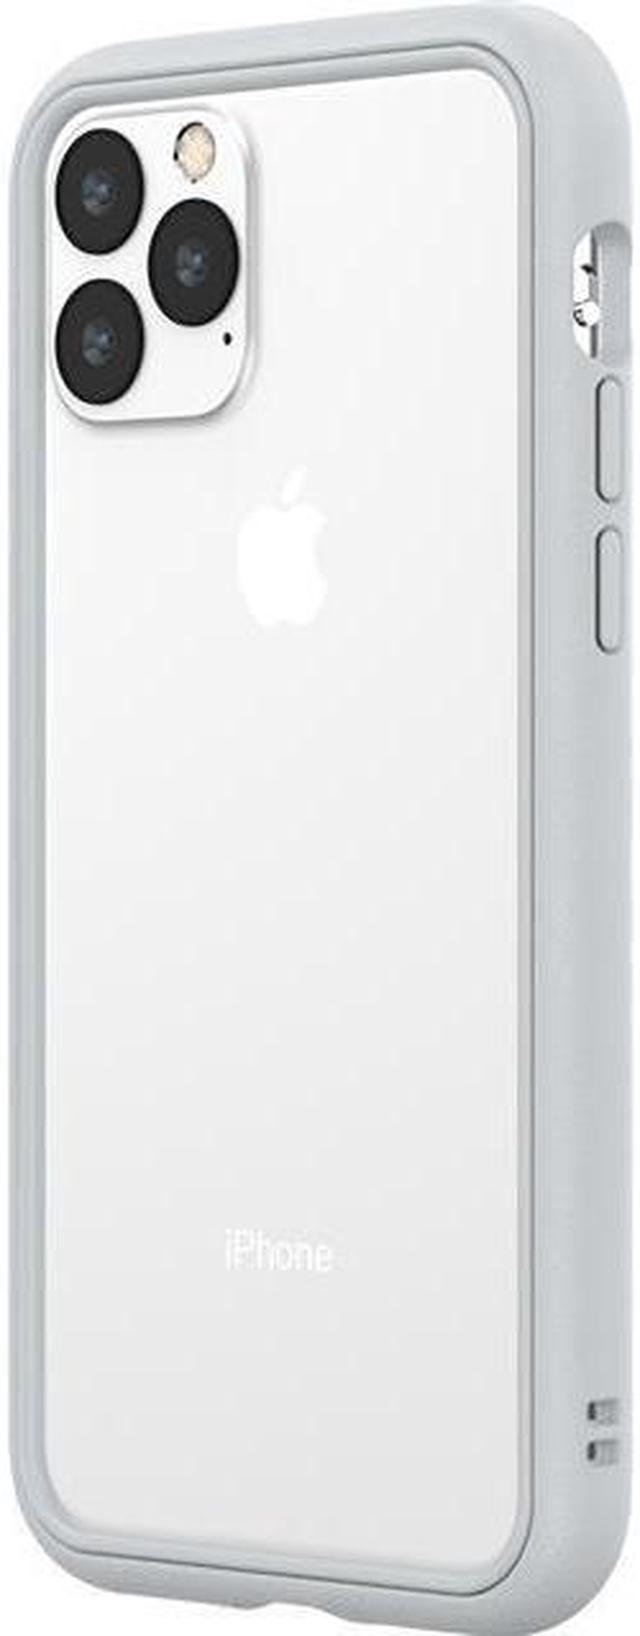 RhinoShield CrashGuard NX Modular Bumper Case for iPhone 11 Pro, Platinum  Gray Cases & Covers 